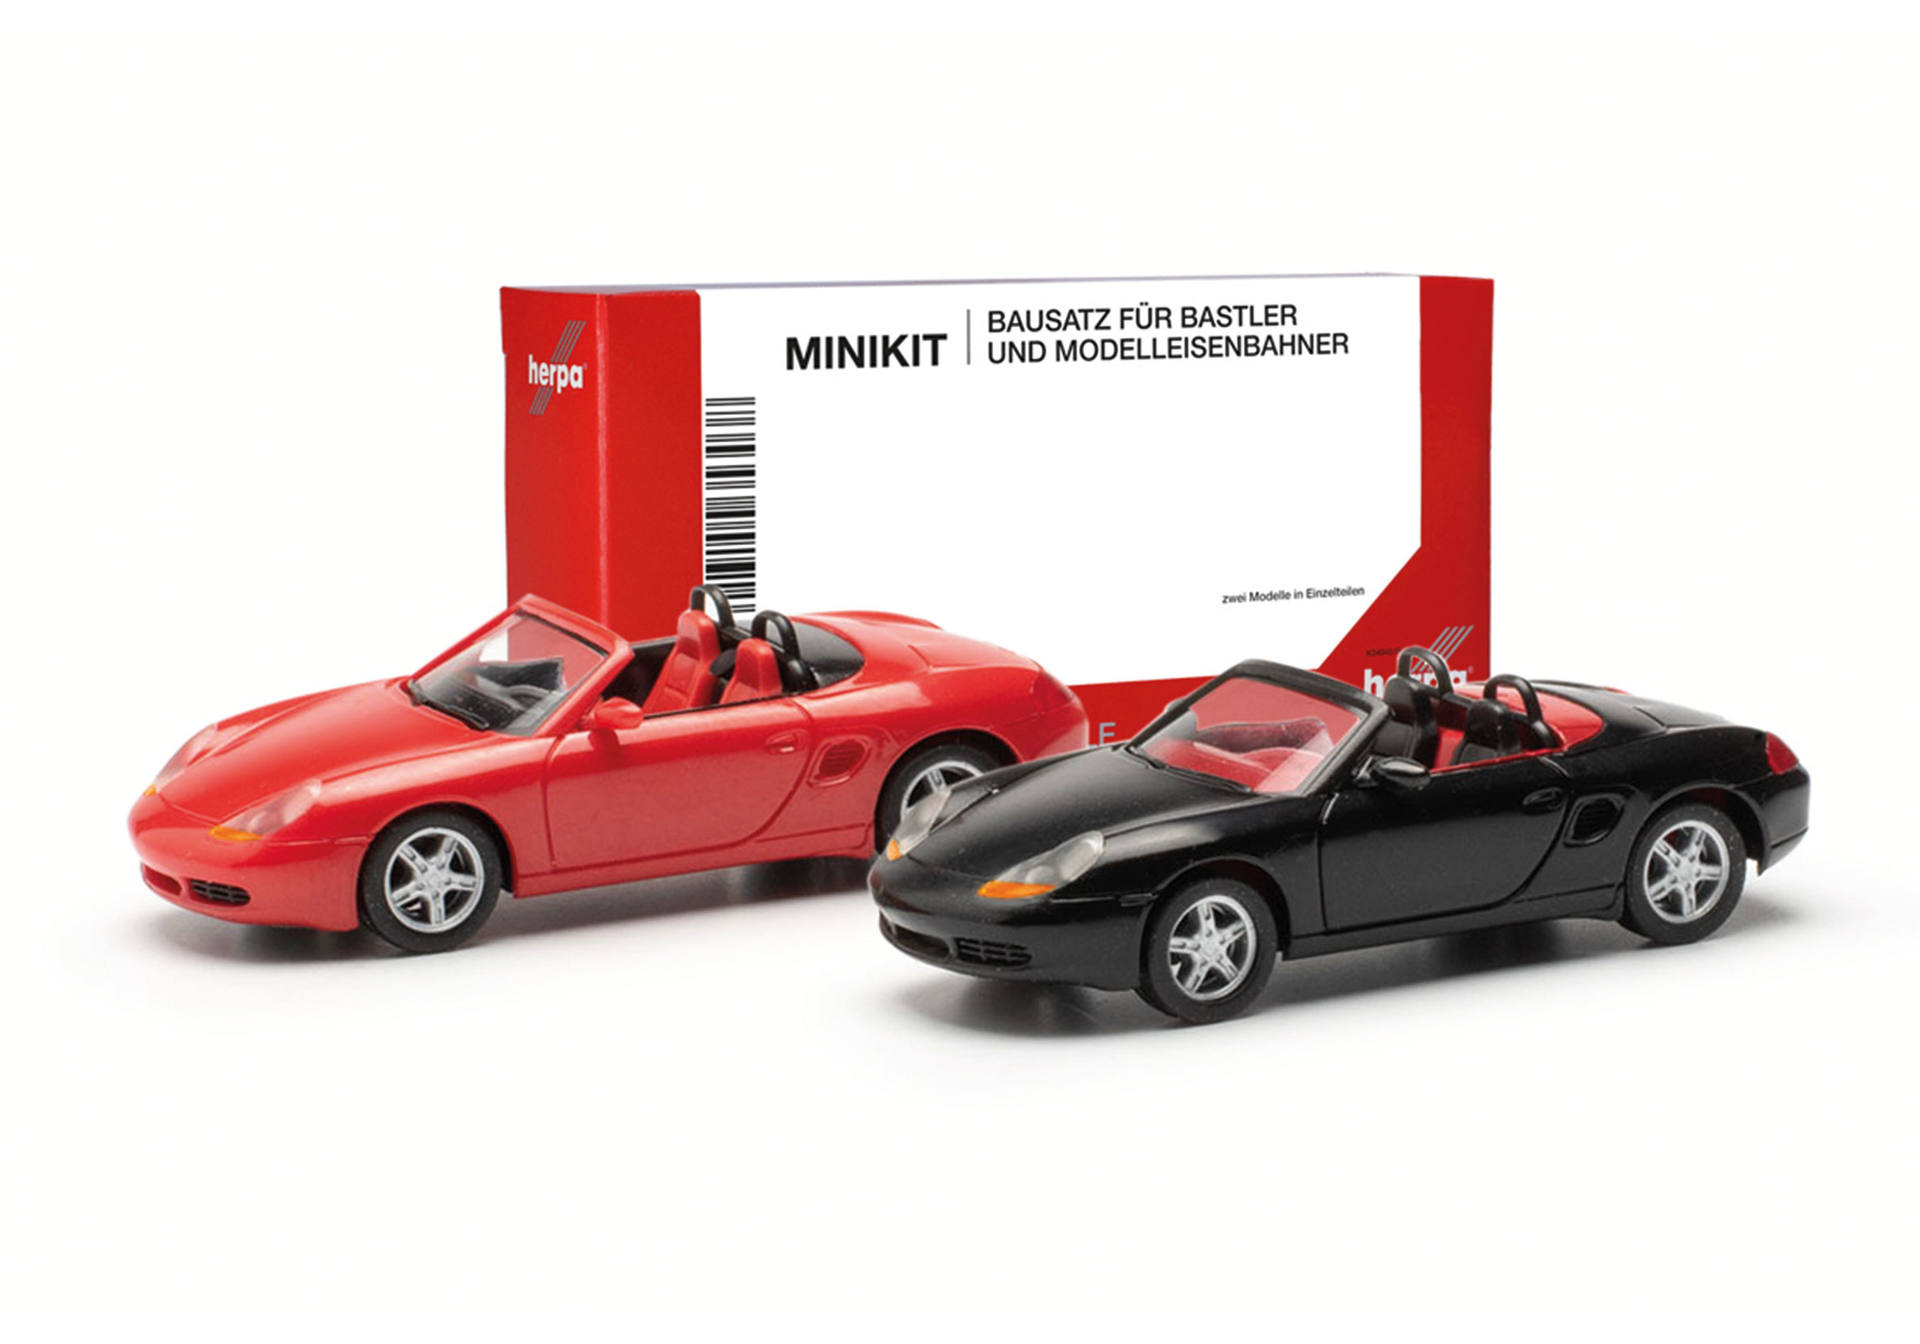 Herpa MiniKit: Porsche Boxster S, 2 Stück